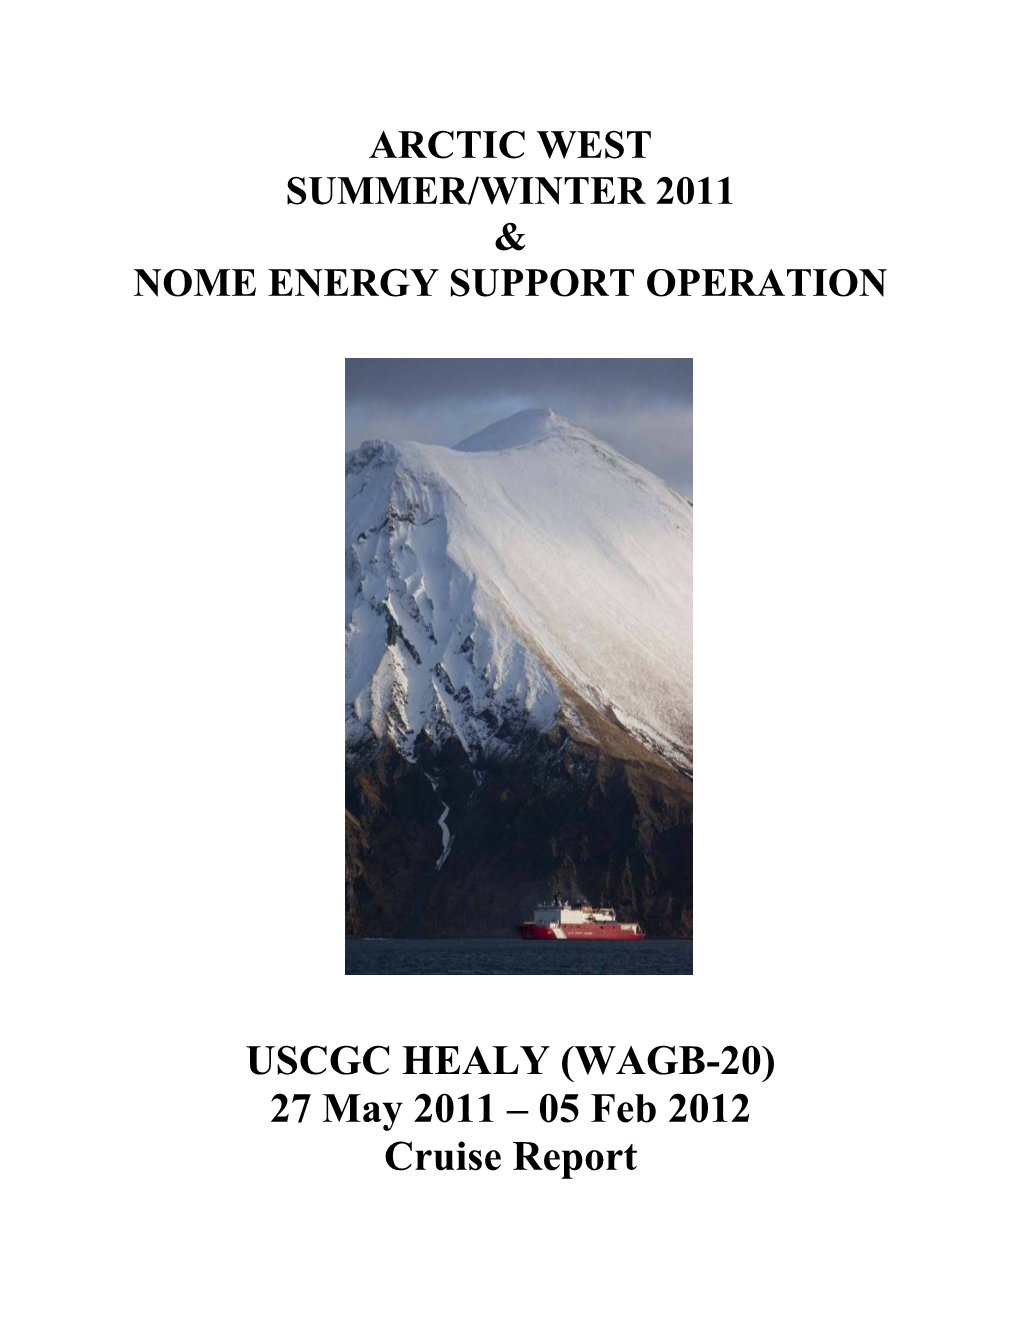 USCGC HEALY (WAGB-20) 27 May 2011 – 05 Feb 2012 Cruise Report